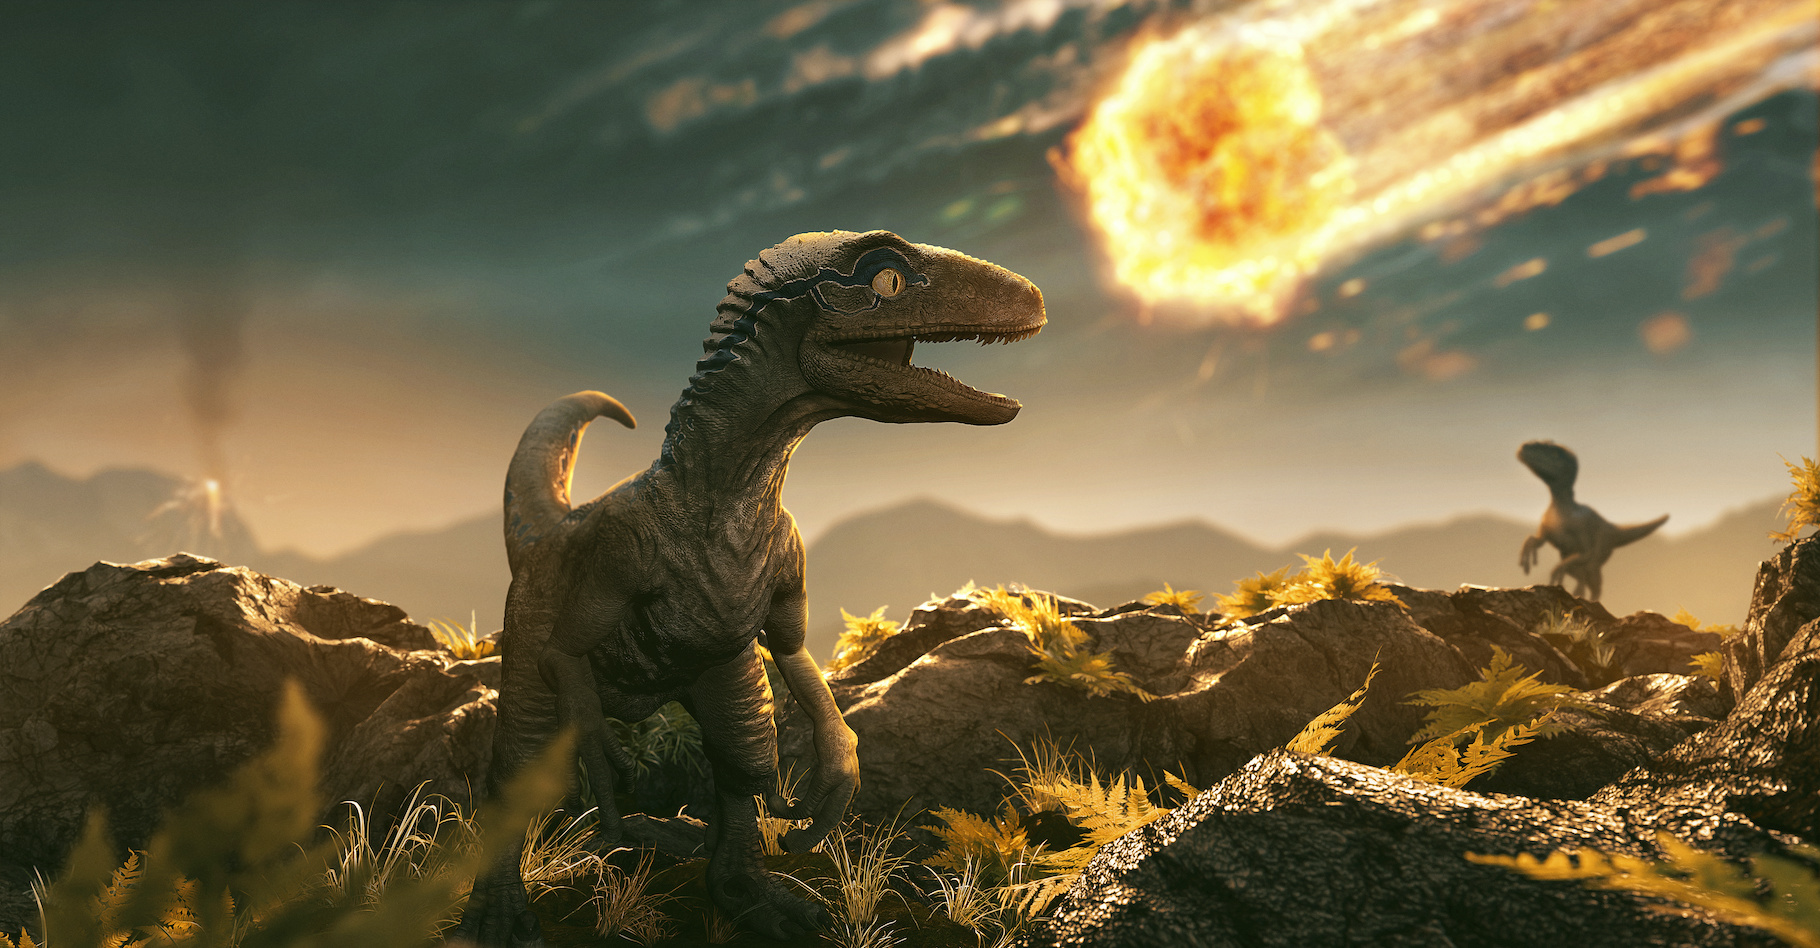 Une vue d'artiste de la mort des dinosaures. © lassedesign, Adobe Stock